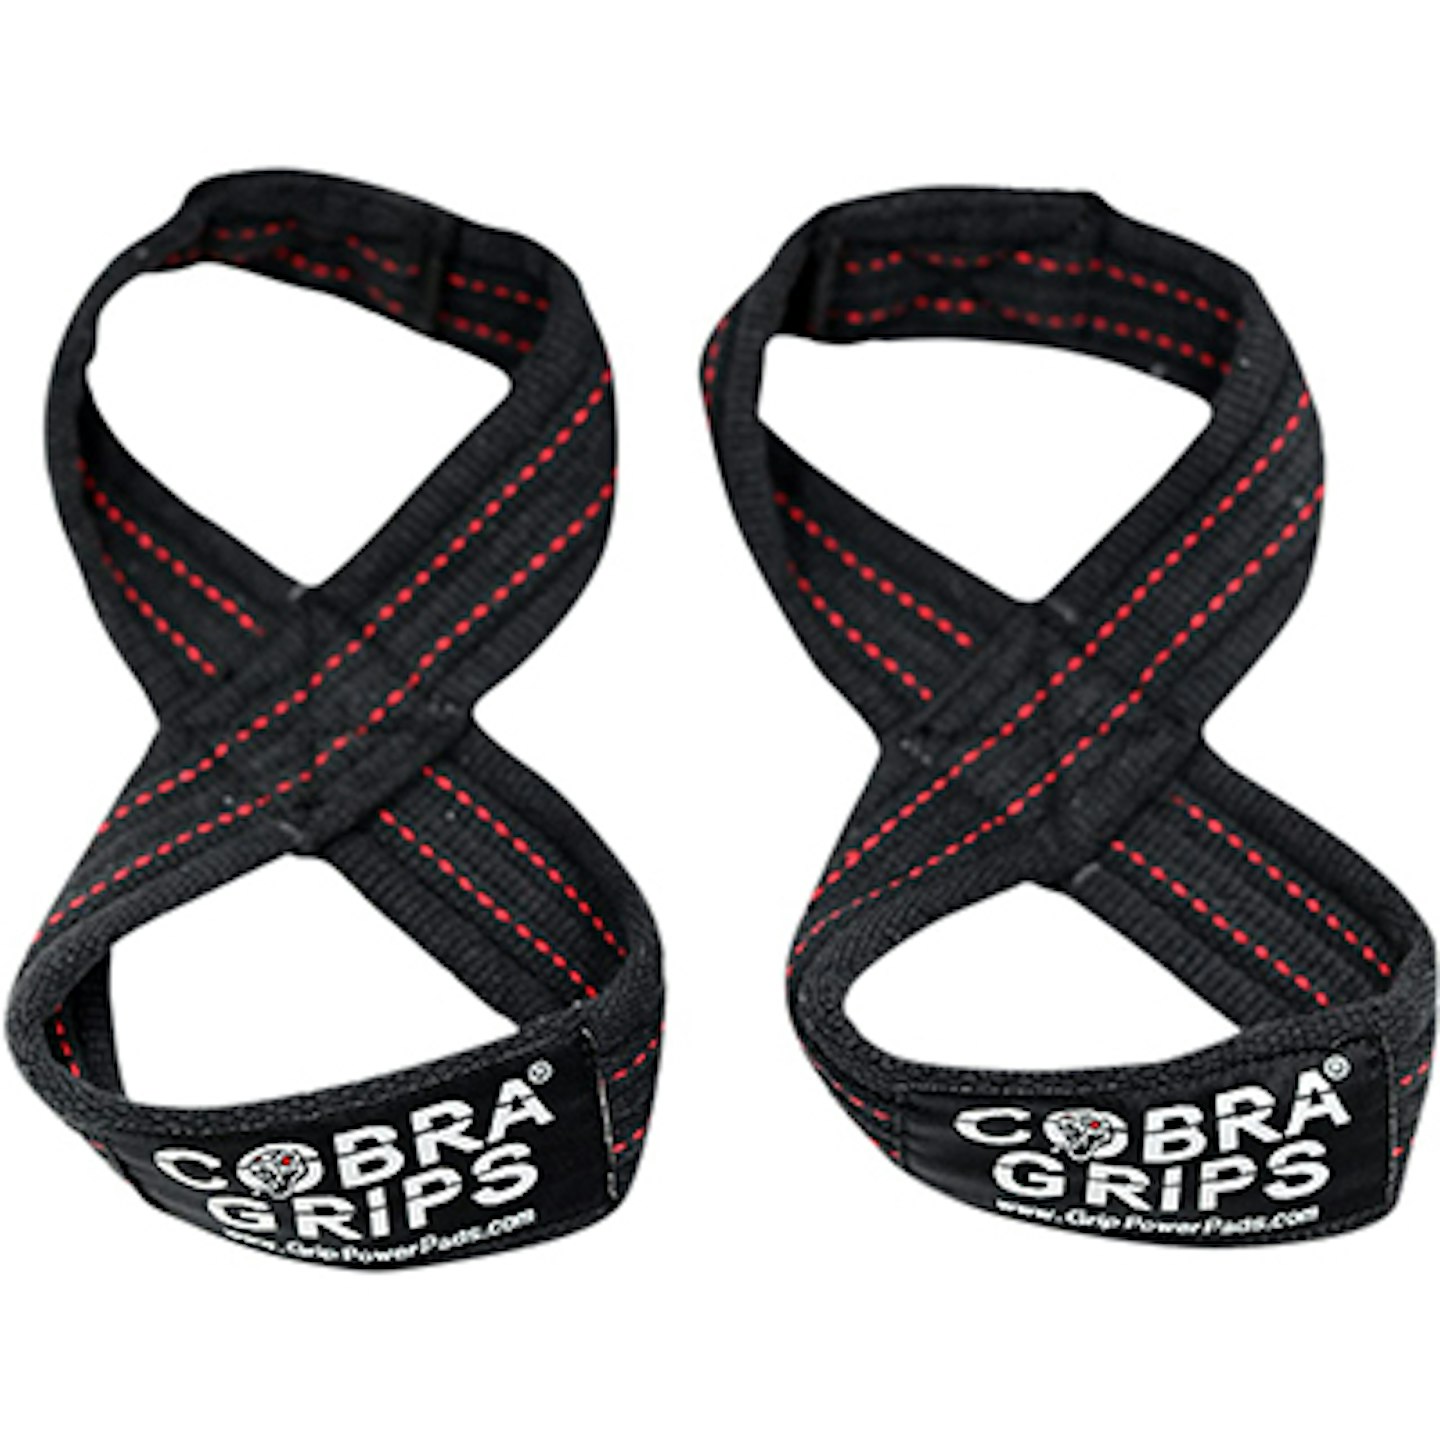 cobra grip Deadlift Straps